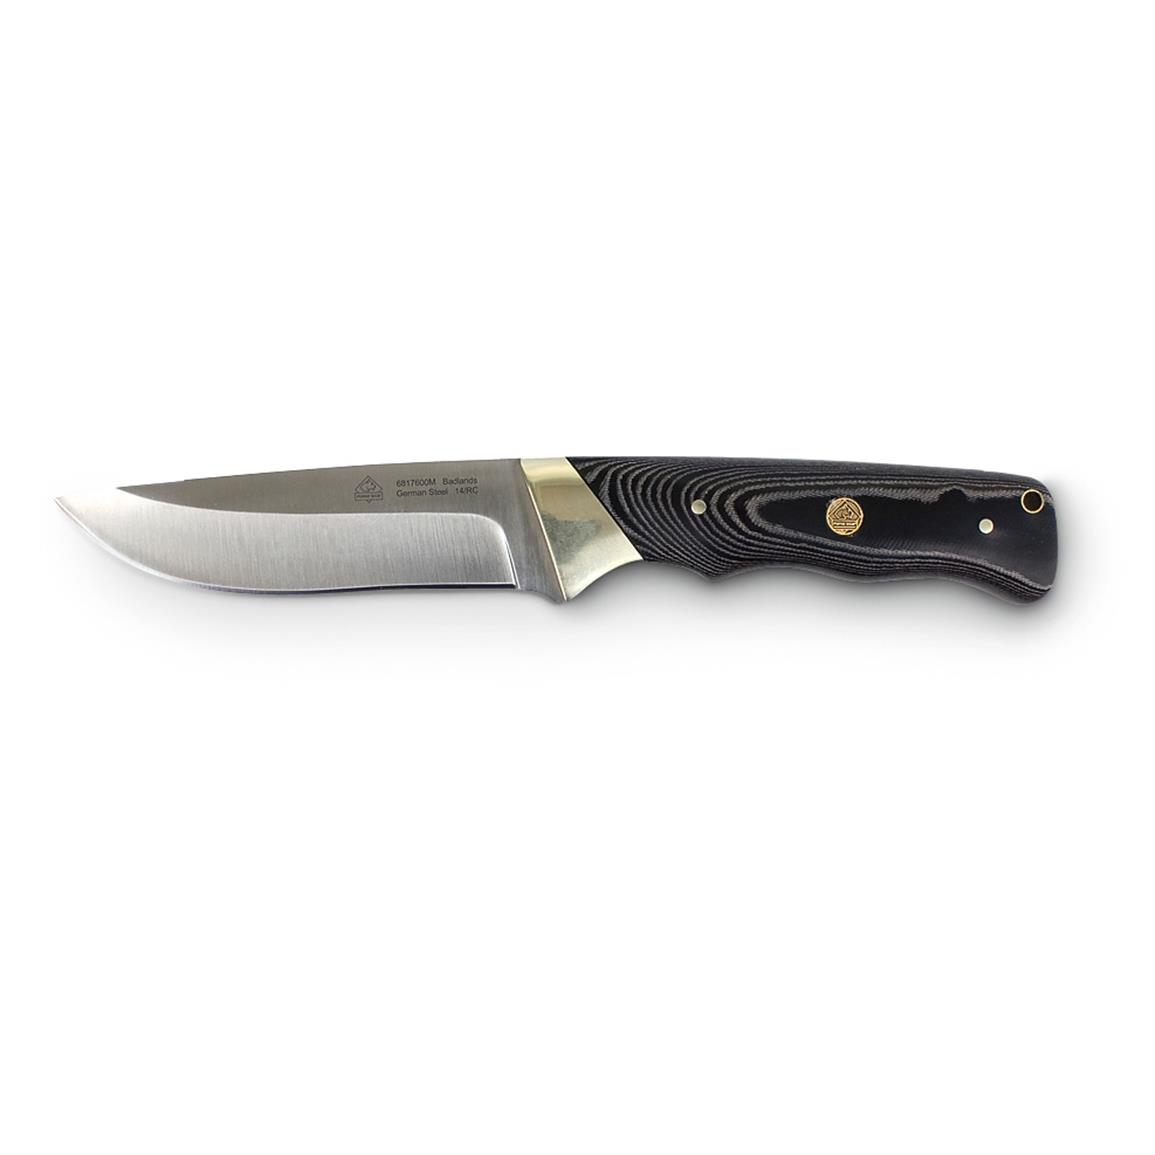 PUMA Badlands SGB Fixed-Blade Hunting Knife, 4